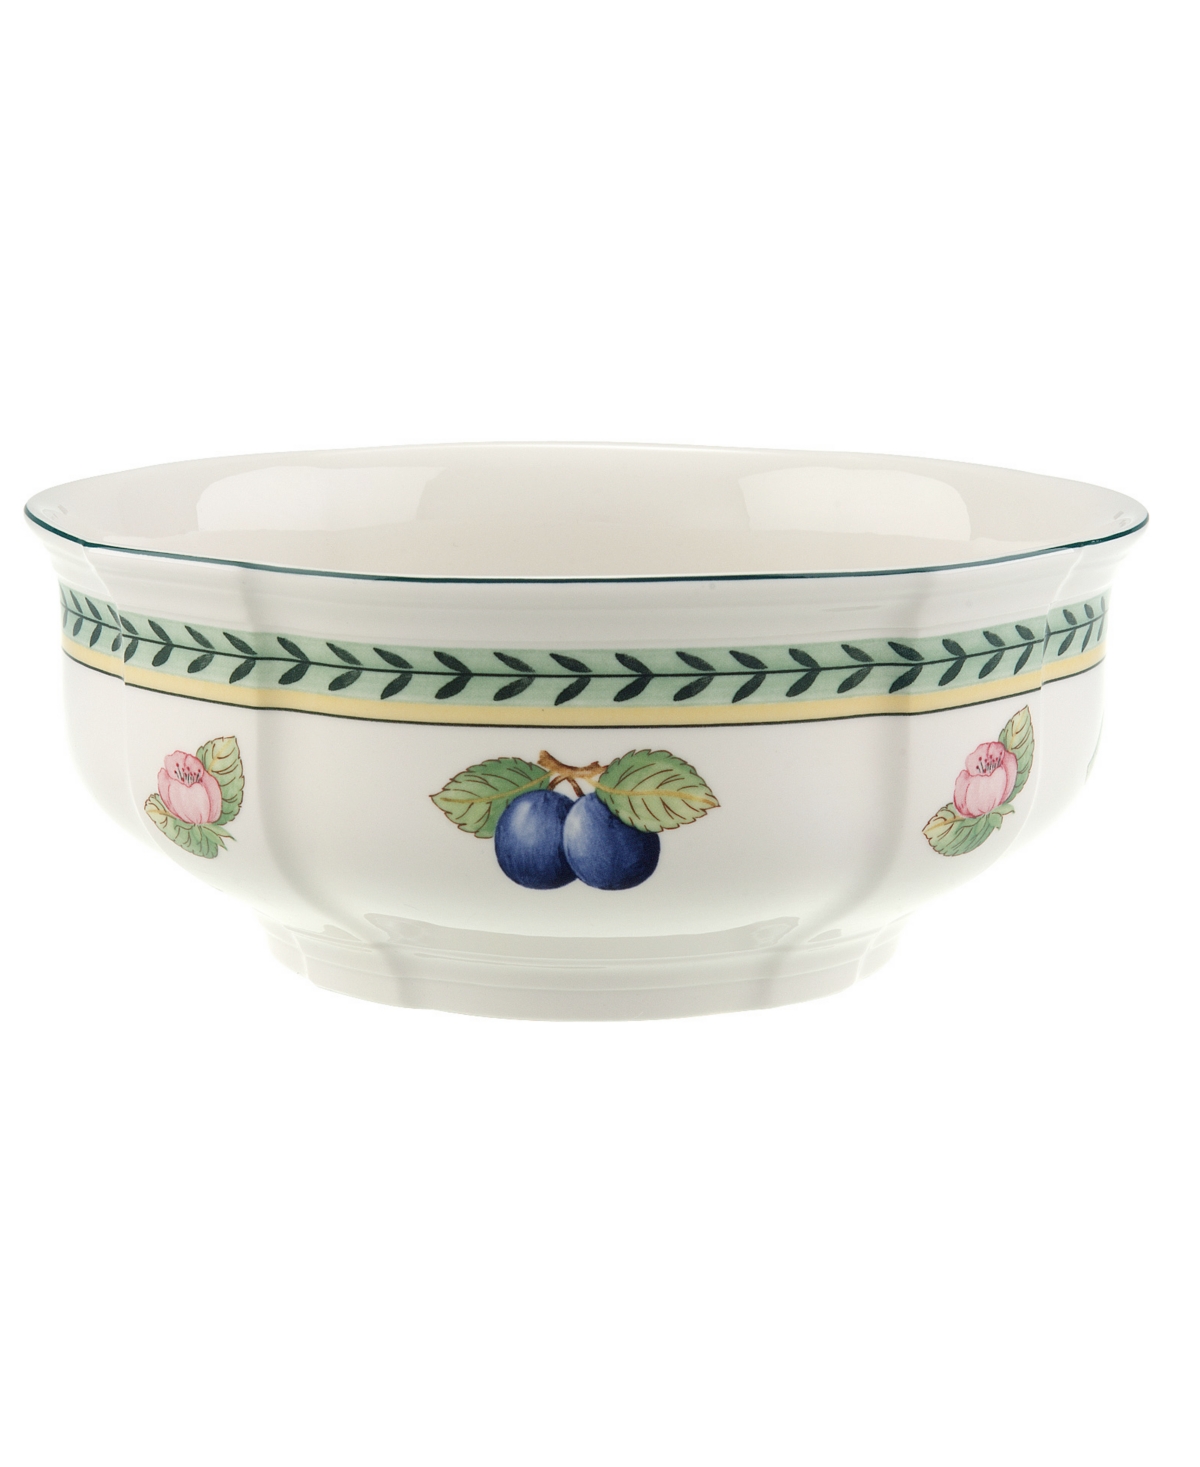 8.25" French Garden Round Vegetable Bowl, Premium Porcelain - Fleurence